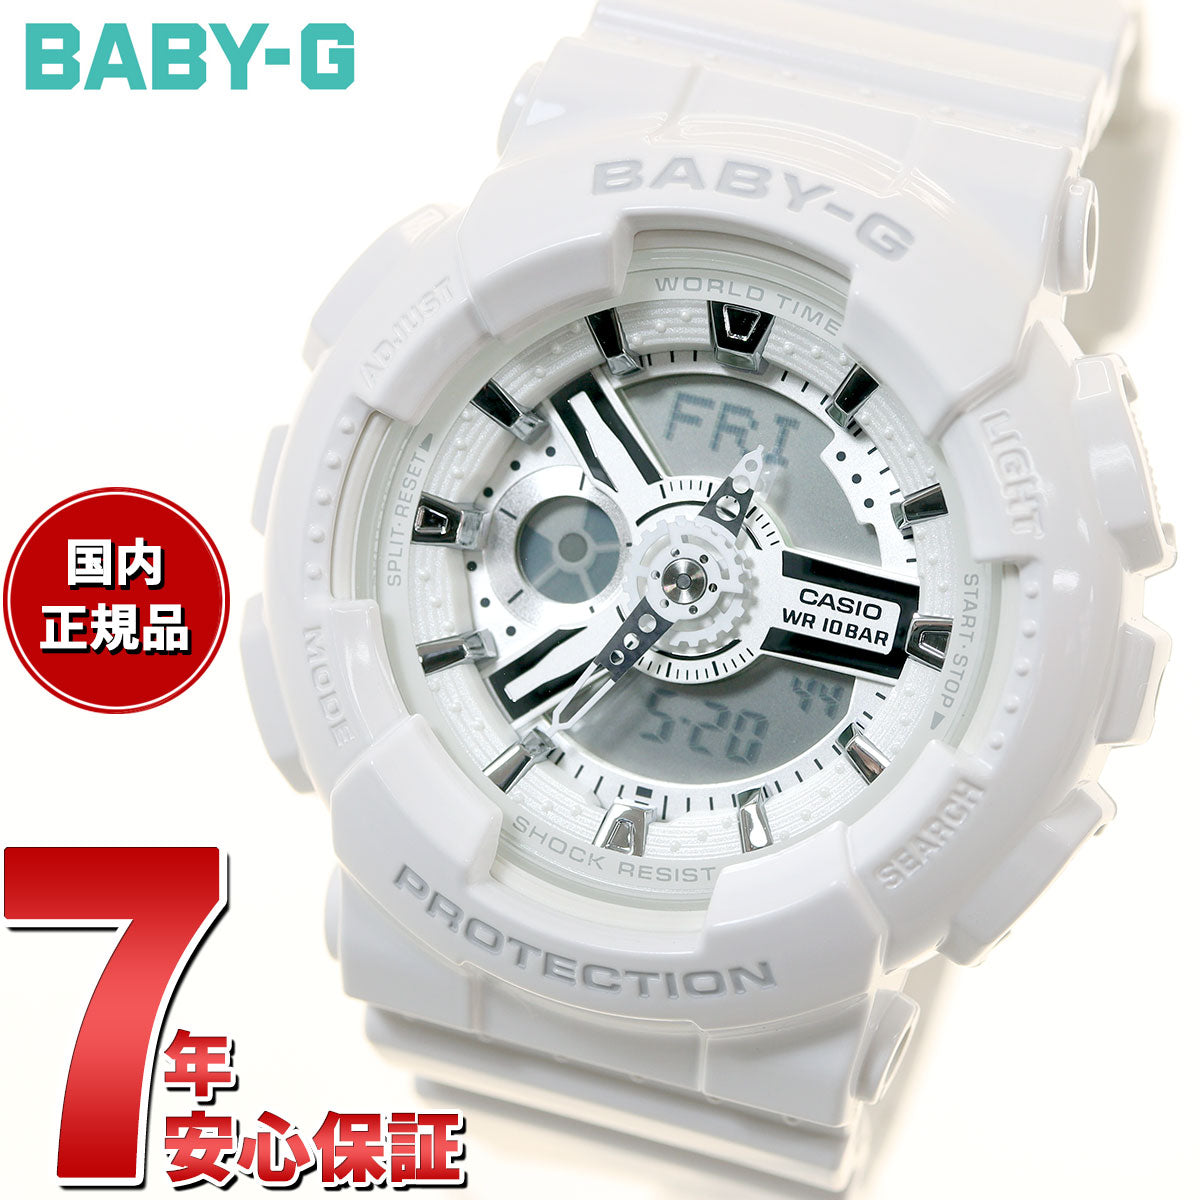 BABY-G カシオ ベビーG レディース 腕時計 ホワイト 白 アナデジ BA